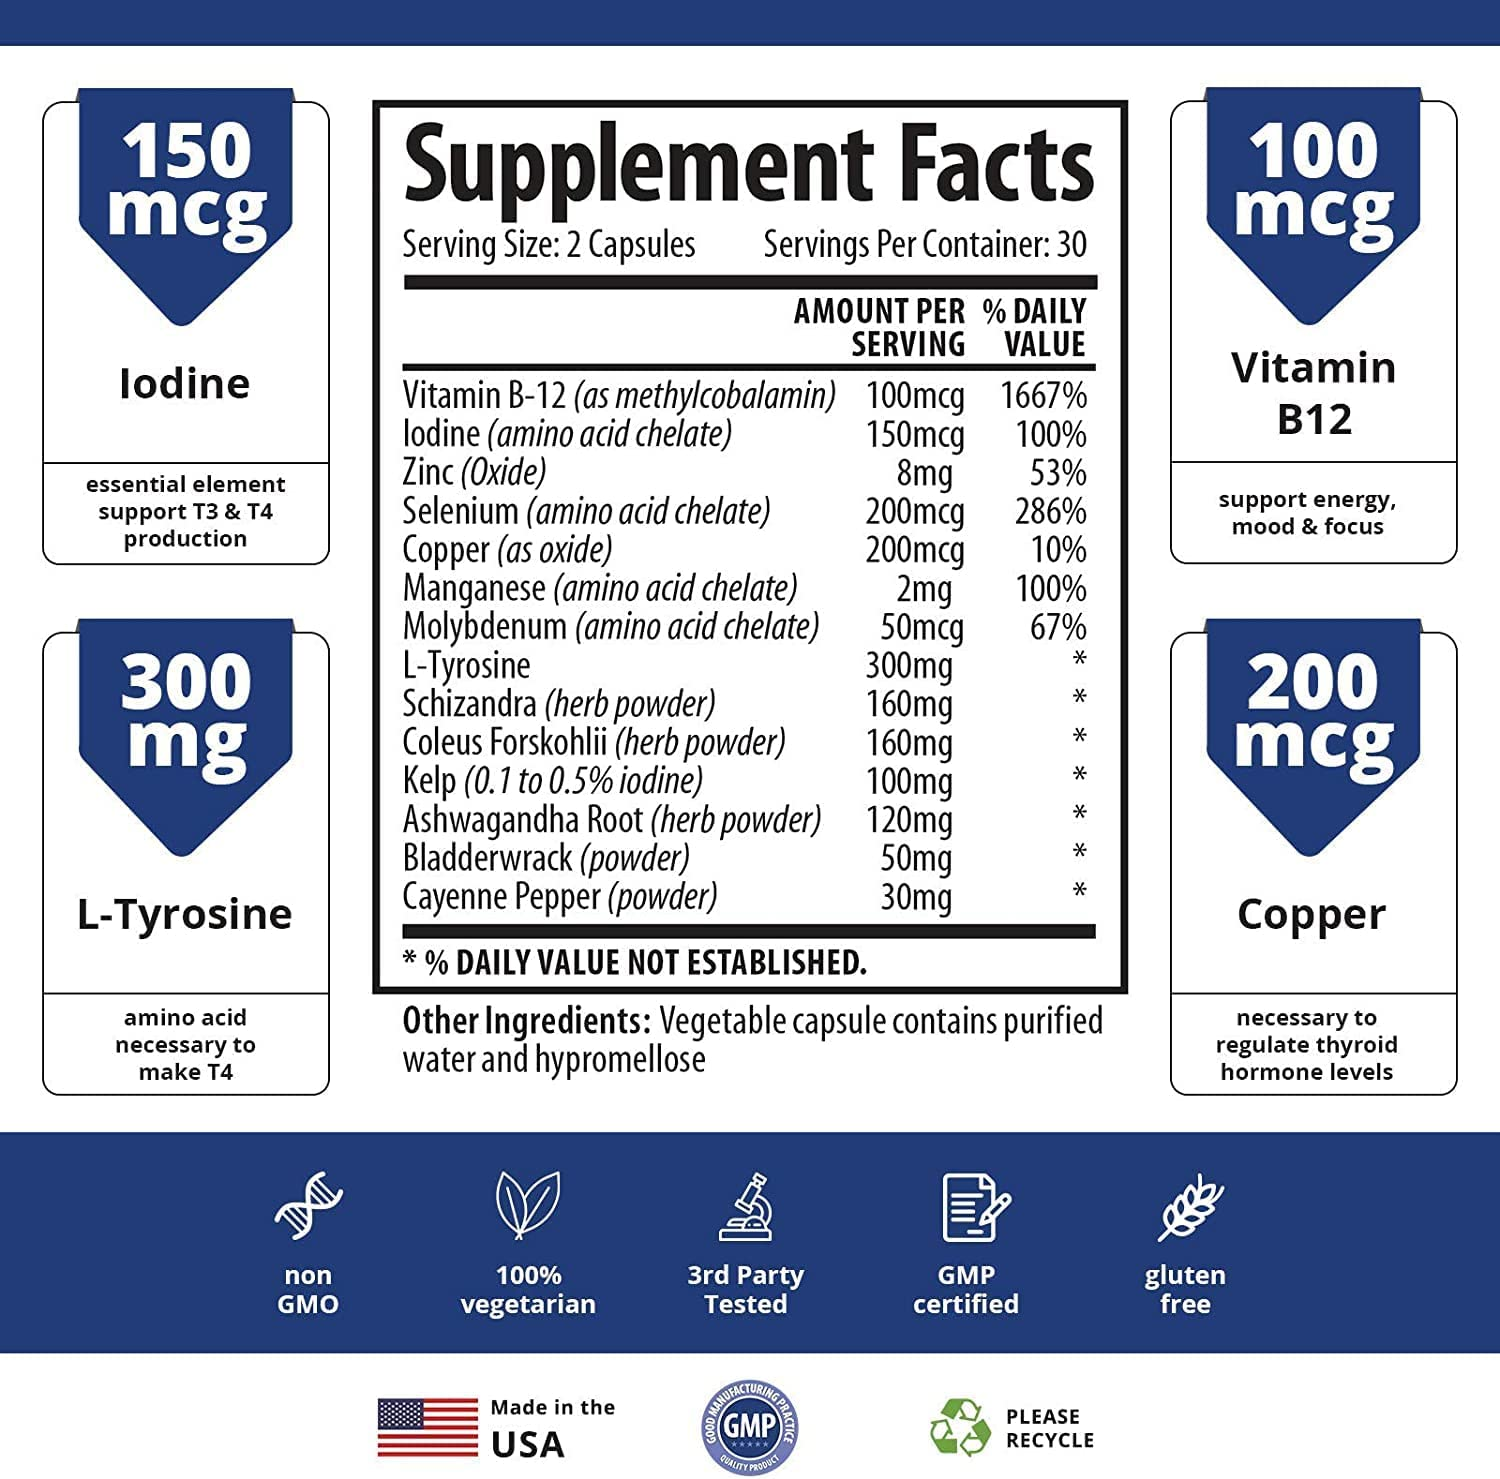 Thyroid Support Supplement for Women and Men - Energy & Focus Formula - Vegetarian & Non-Gmo - Iodine, Vitamin B12 Complex, Zinc, Selenium, Ashwagandha, Copper, Coleus Forskohlii, & More 30 Day Supply